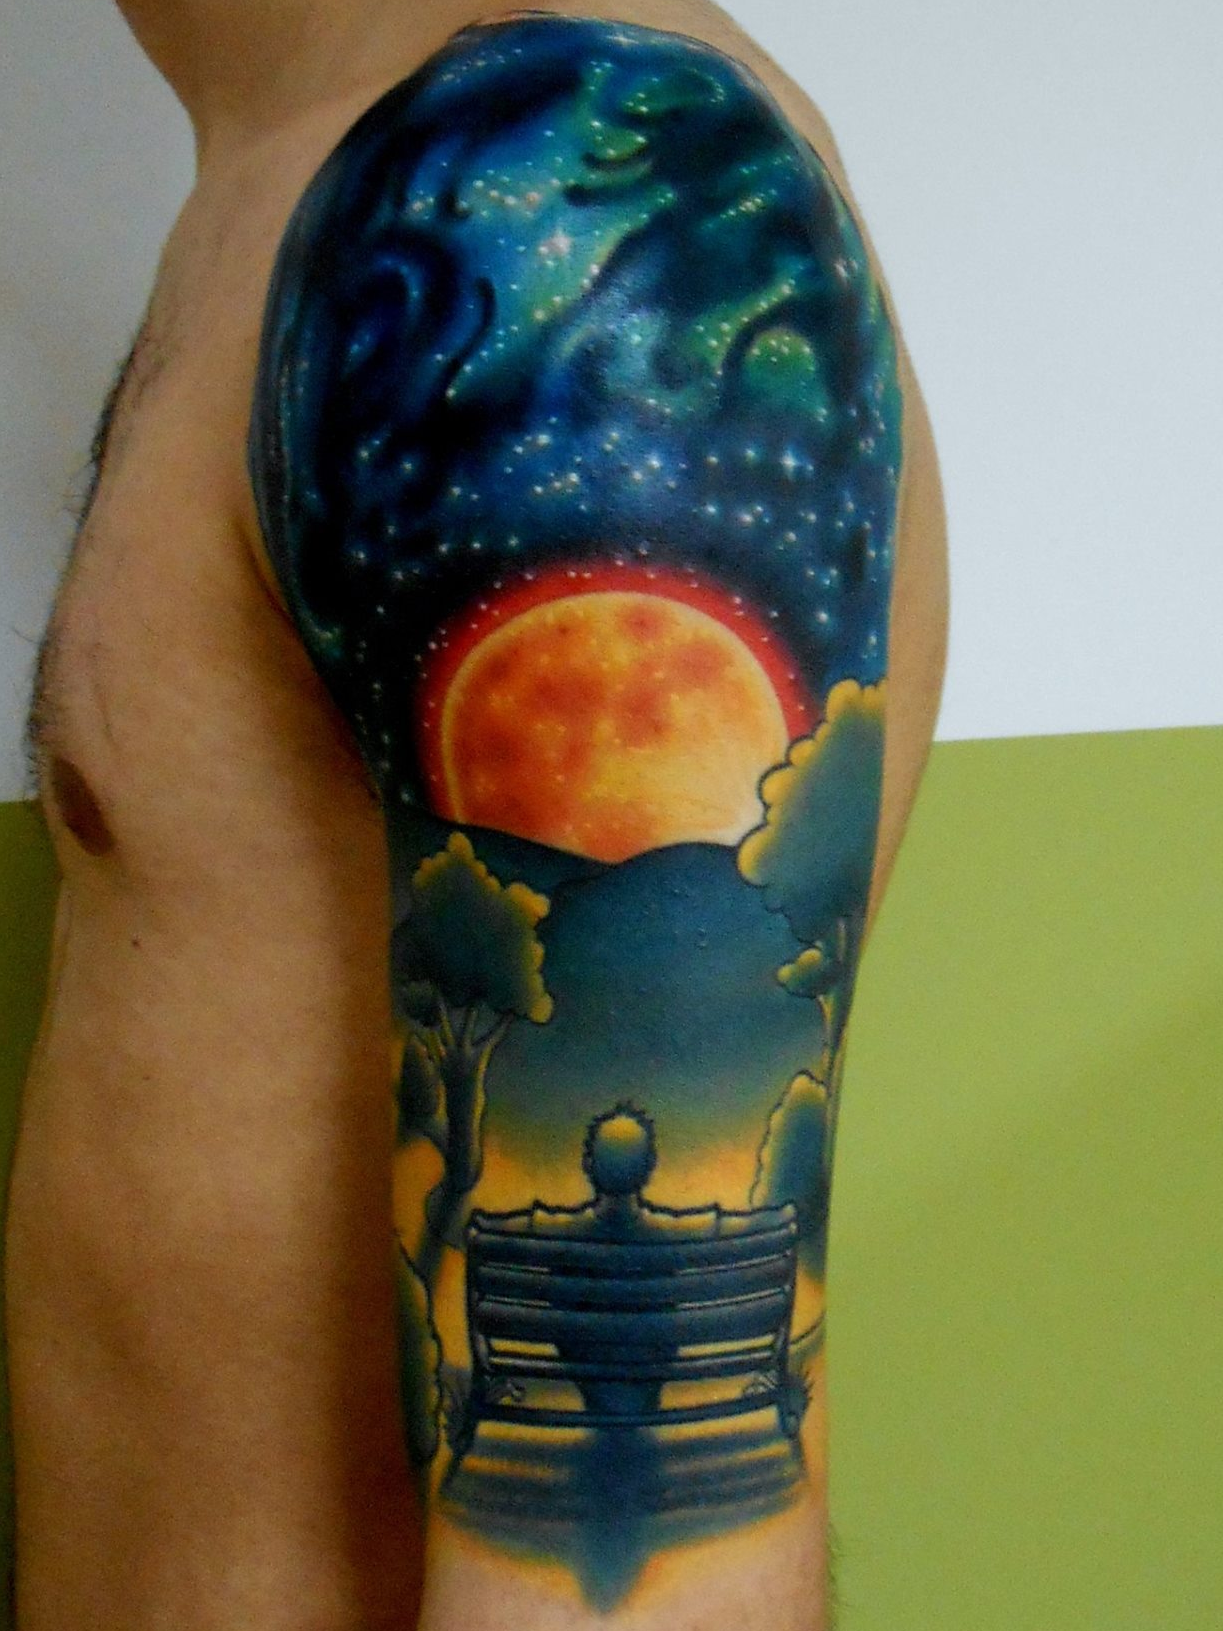 Man on a Bench galaxy space tattoo by Connecticut tattooer Cracker Joe Swider